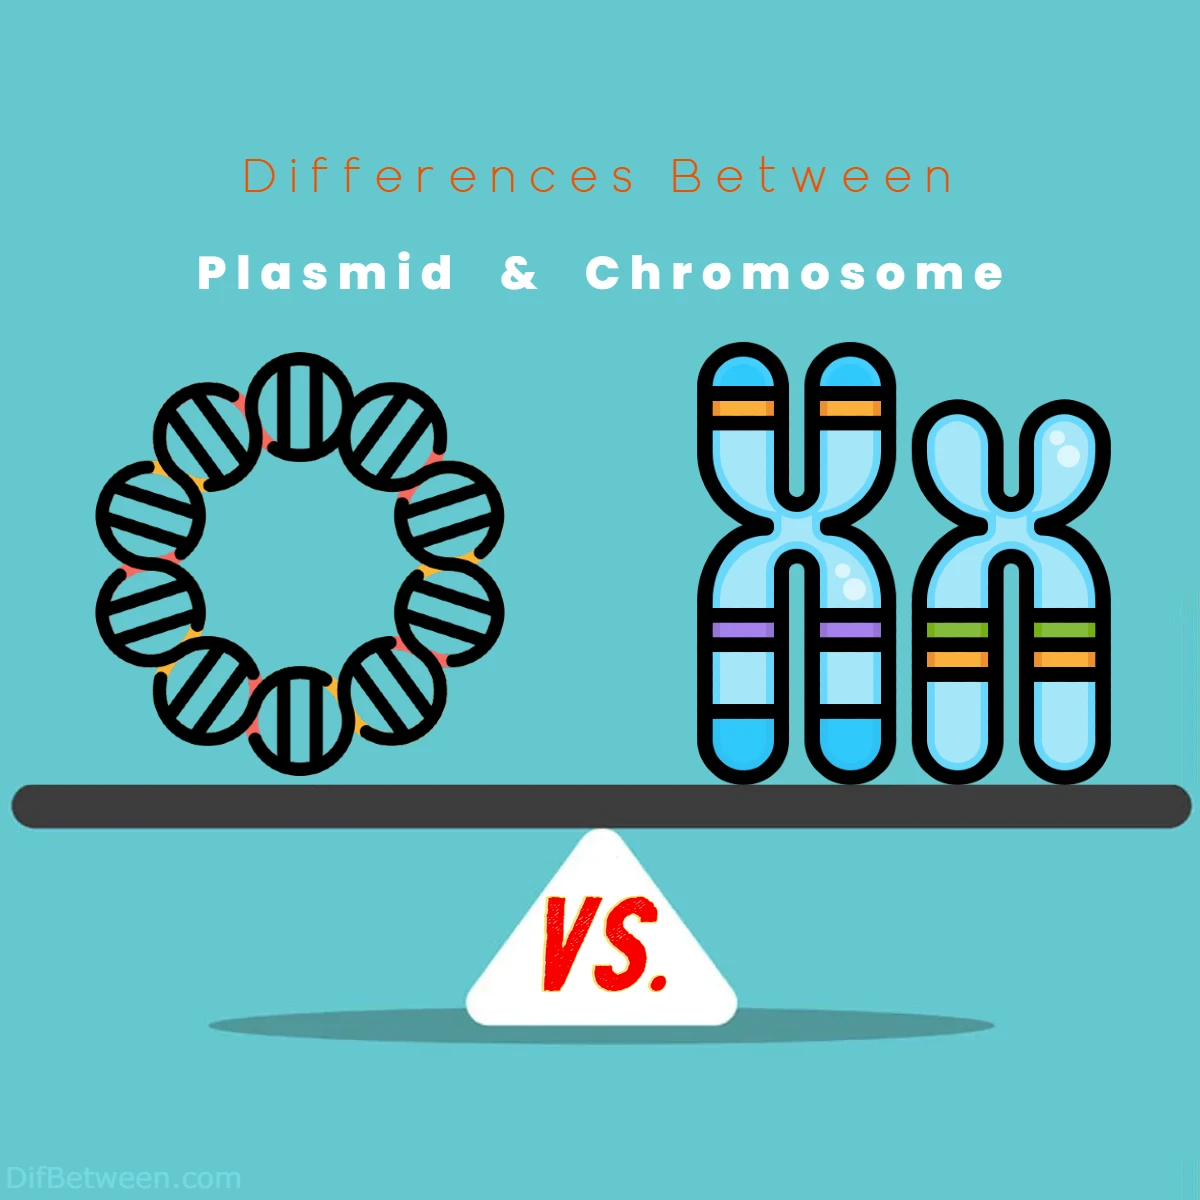 Differences Between Plasmid vs Chromosome